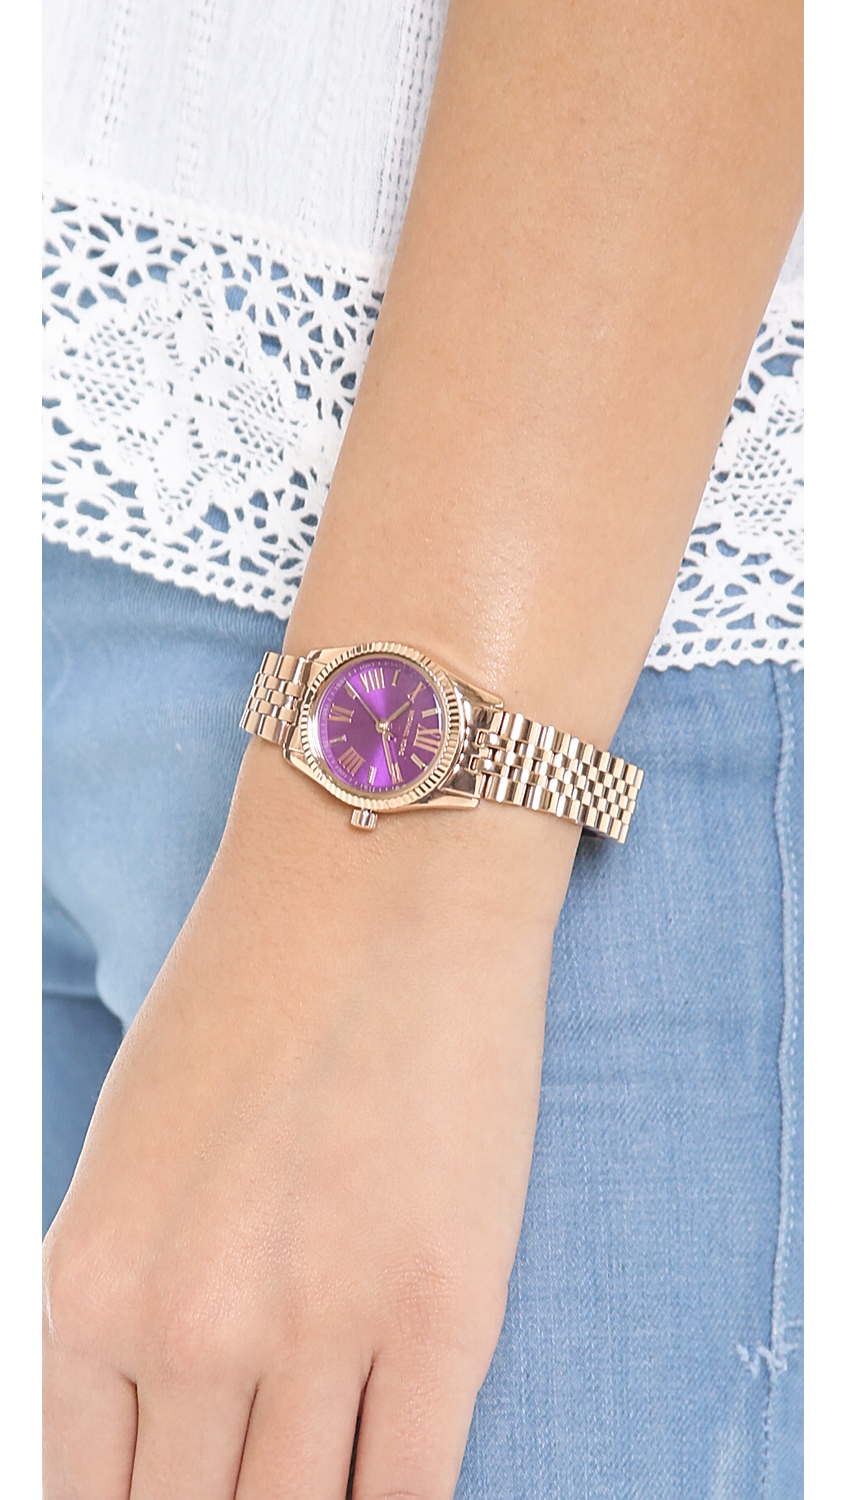 Michael Kors Preppy Chic Petite Lexington Watch in Purple/Rose 